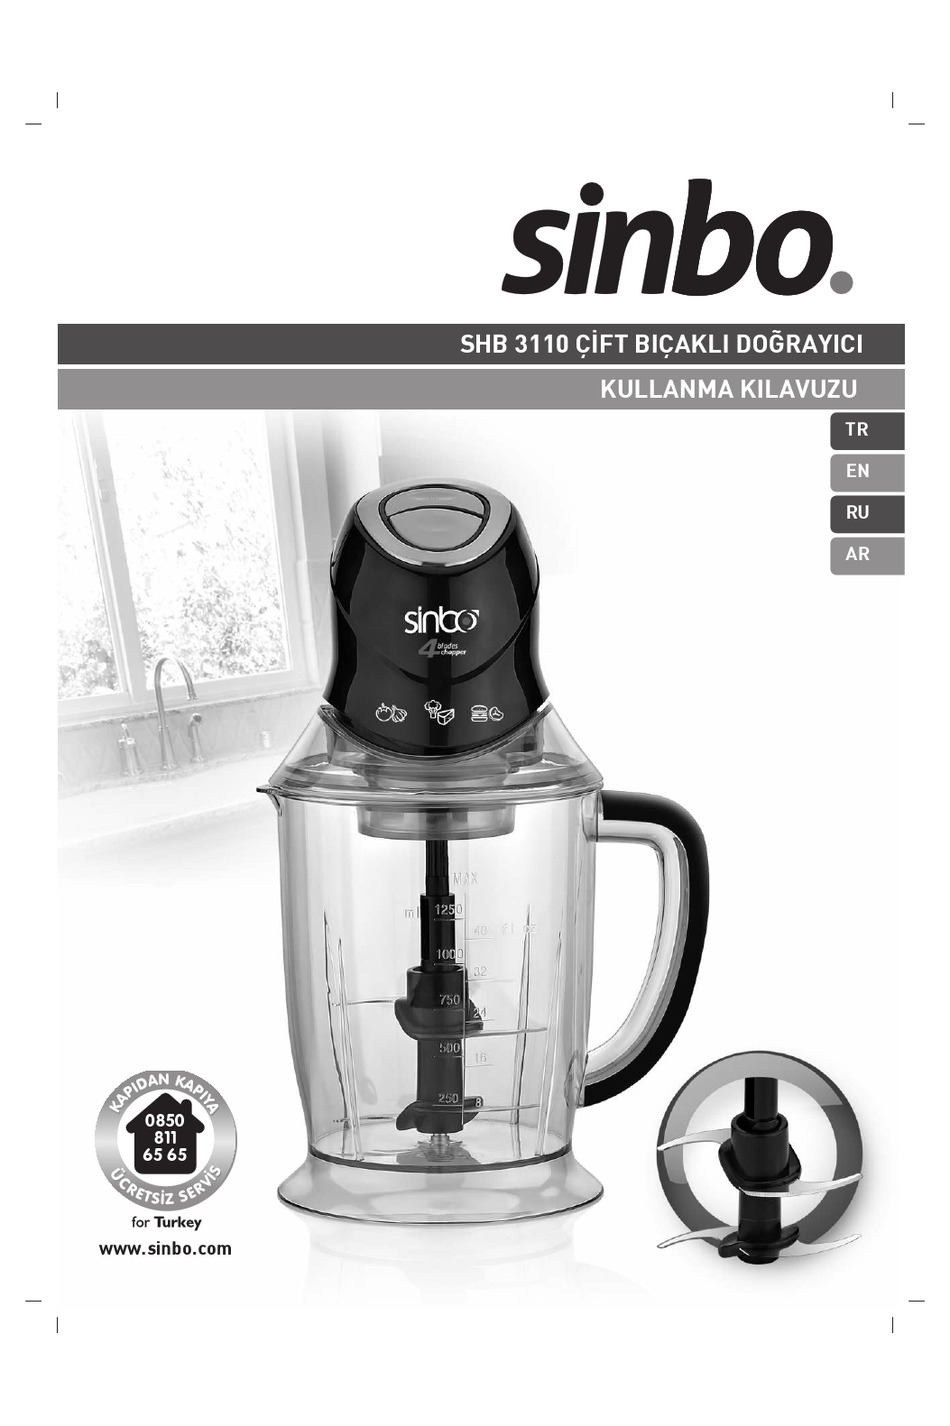 SINBO SHB 3110 INSTRUCTIONS FOR USE MANUAL Pdf Download | ManualsLib